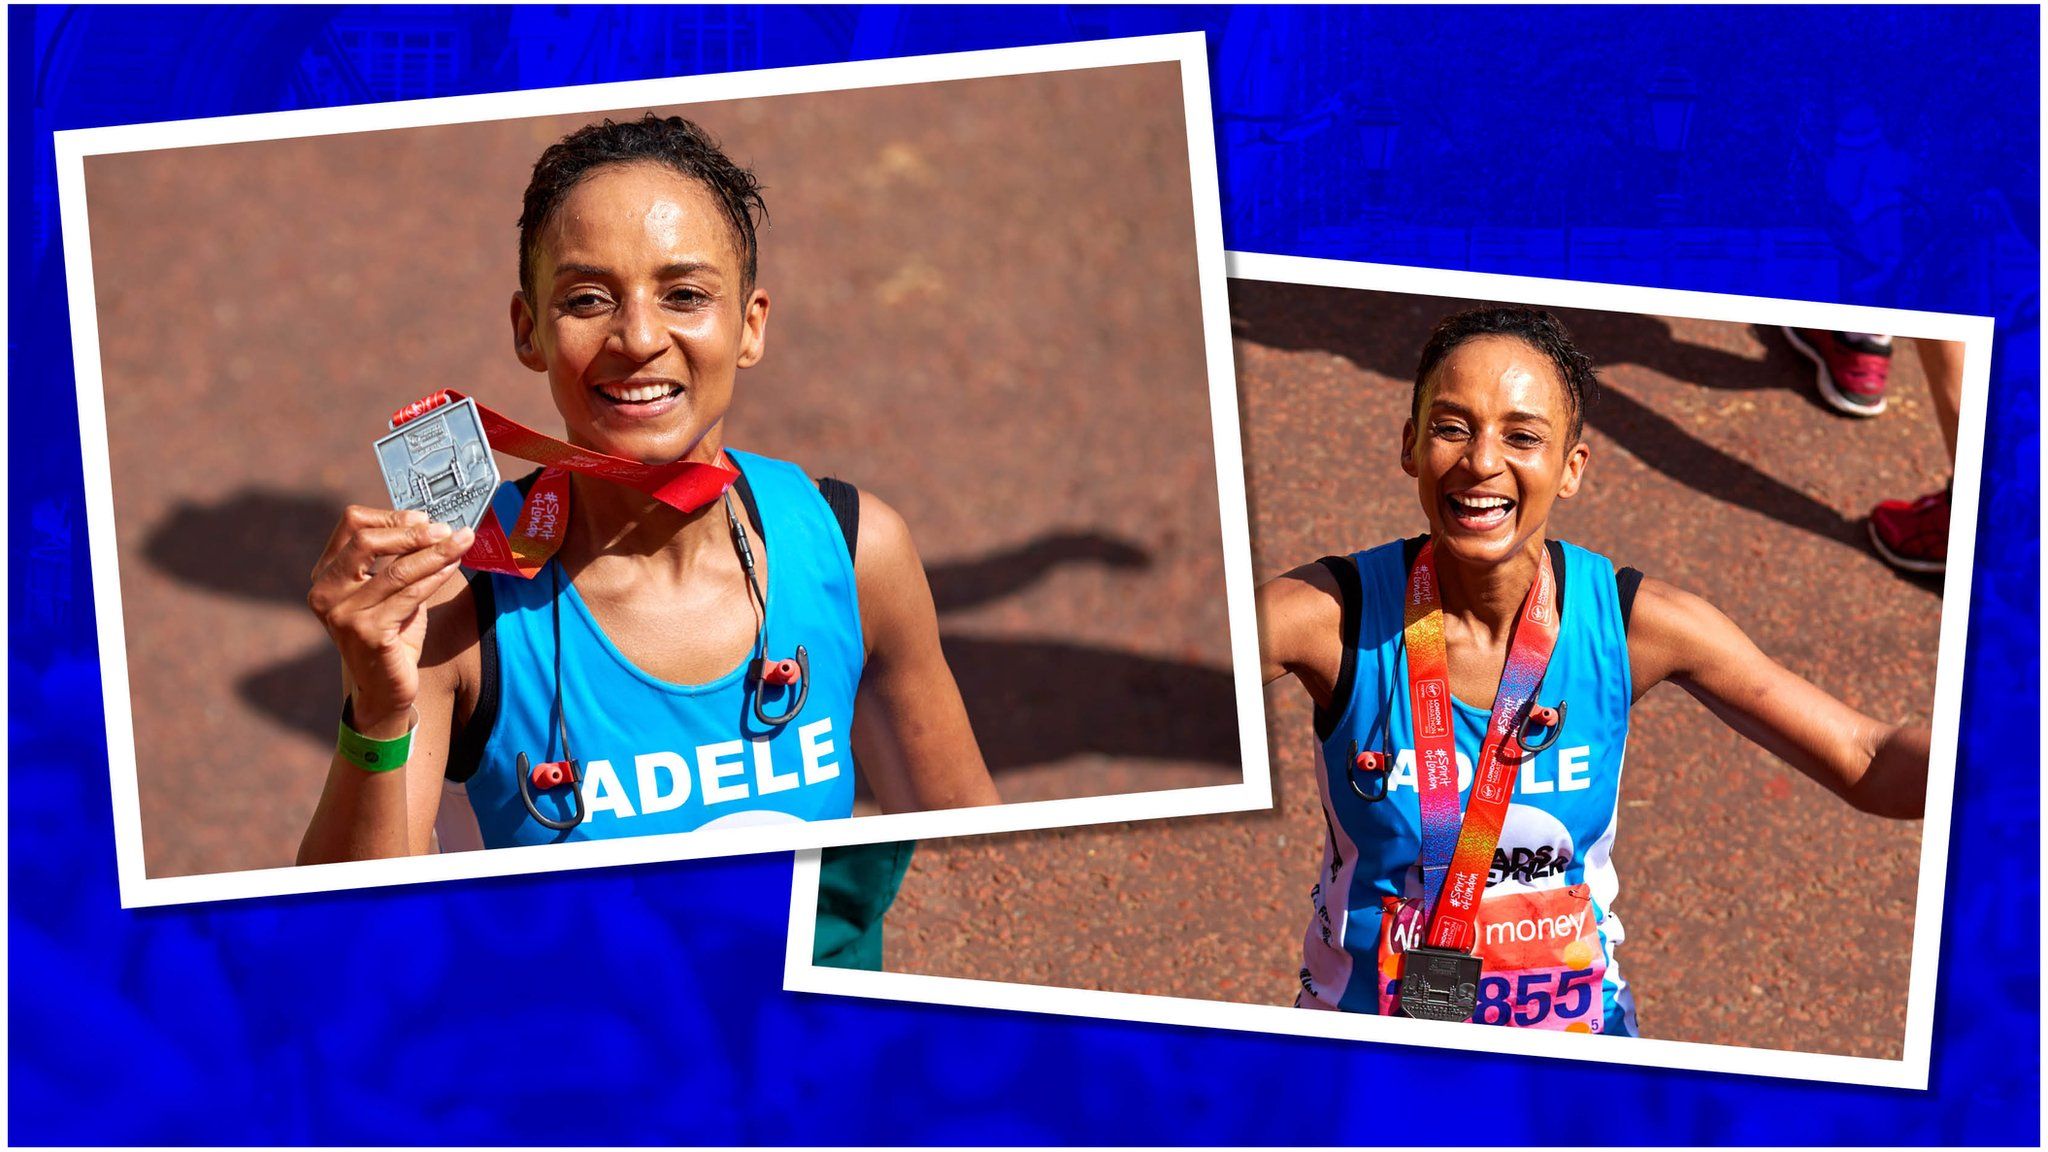 Adele Roberts celebrates after completing the London Marathon